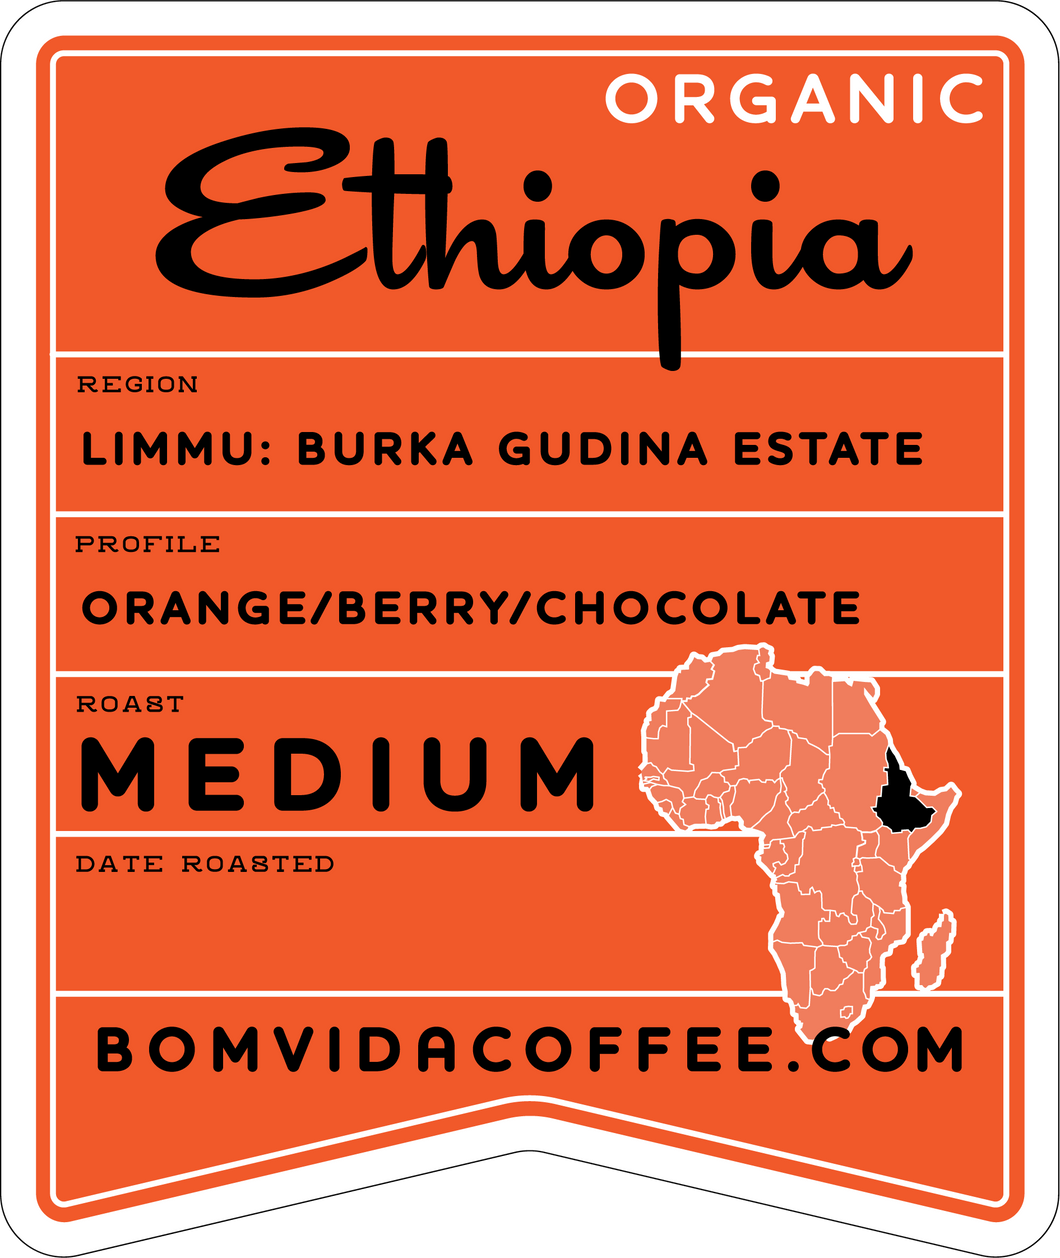 Organic Ethiopia Limmu: Burka Gudina Estate